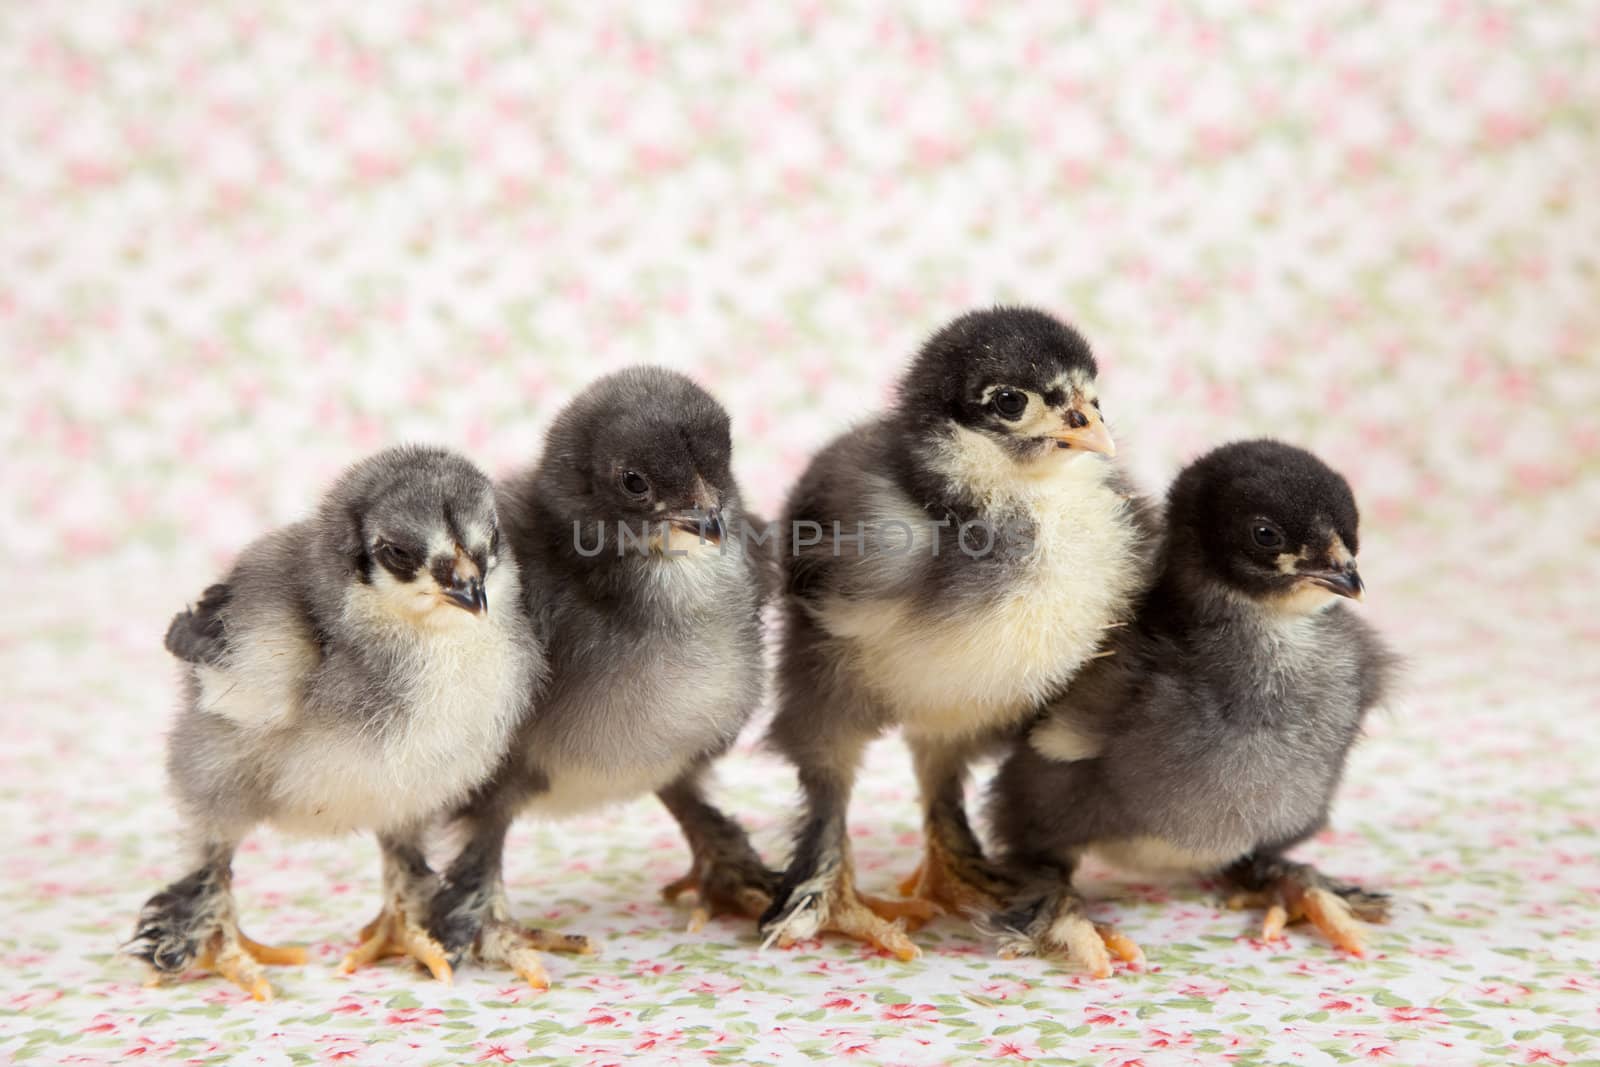 Brahma chicks by Fotosmurf